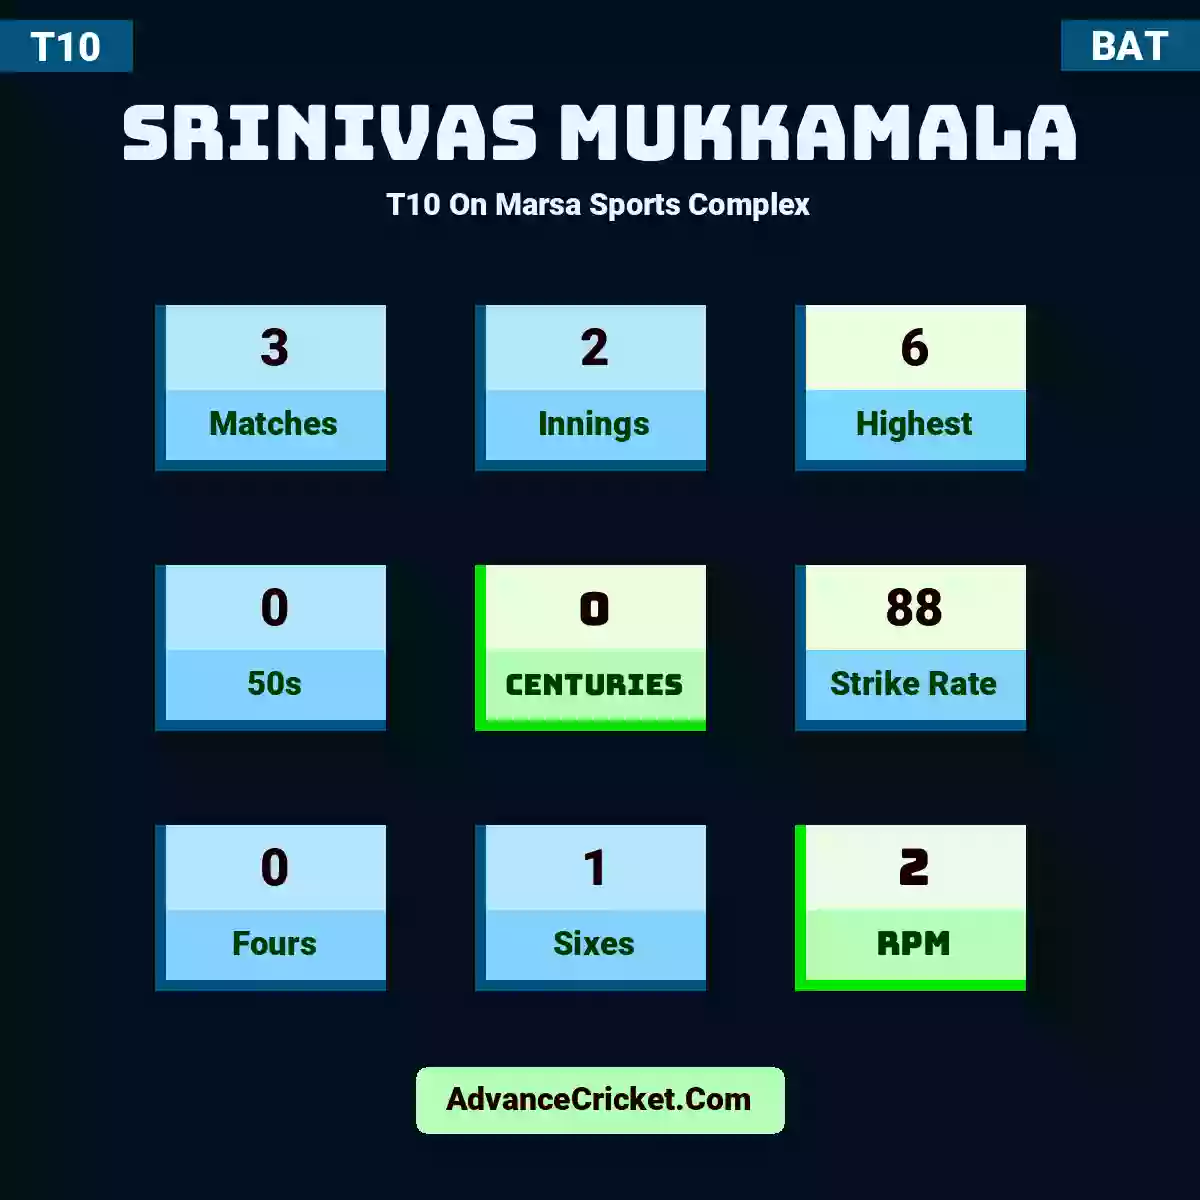 Srinivas Mukkamala T10  On Marsa Sports Complex, Srinivas Mukkamala played 3 matches, scored 6 runs as highest, 0 half-centuries, and 0 centuries, with a strike rate of 88. S.Mukkamala hit 0 fours and 1 sixes, with an RPM of 2.